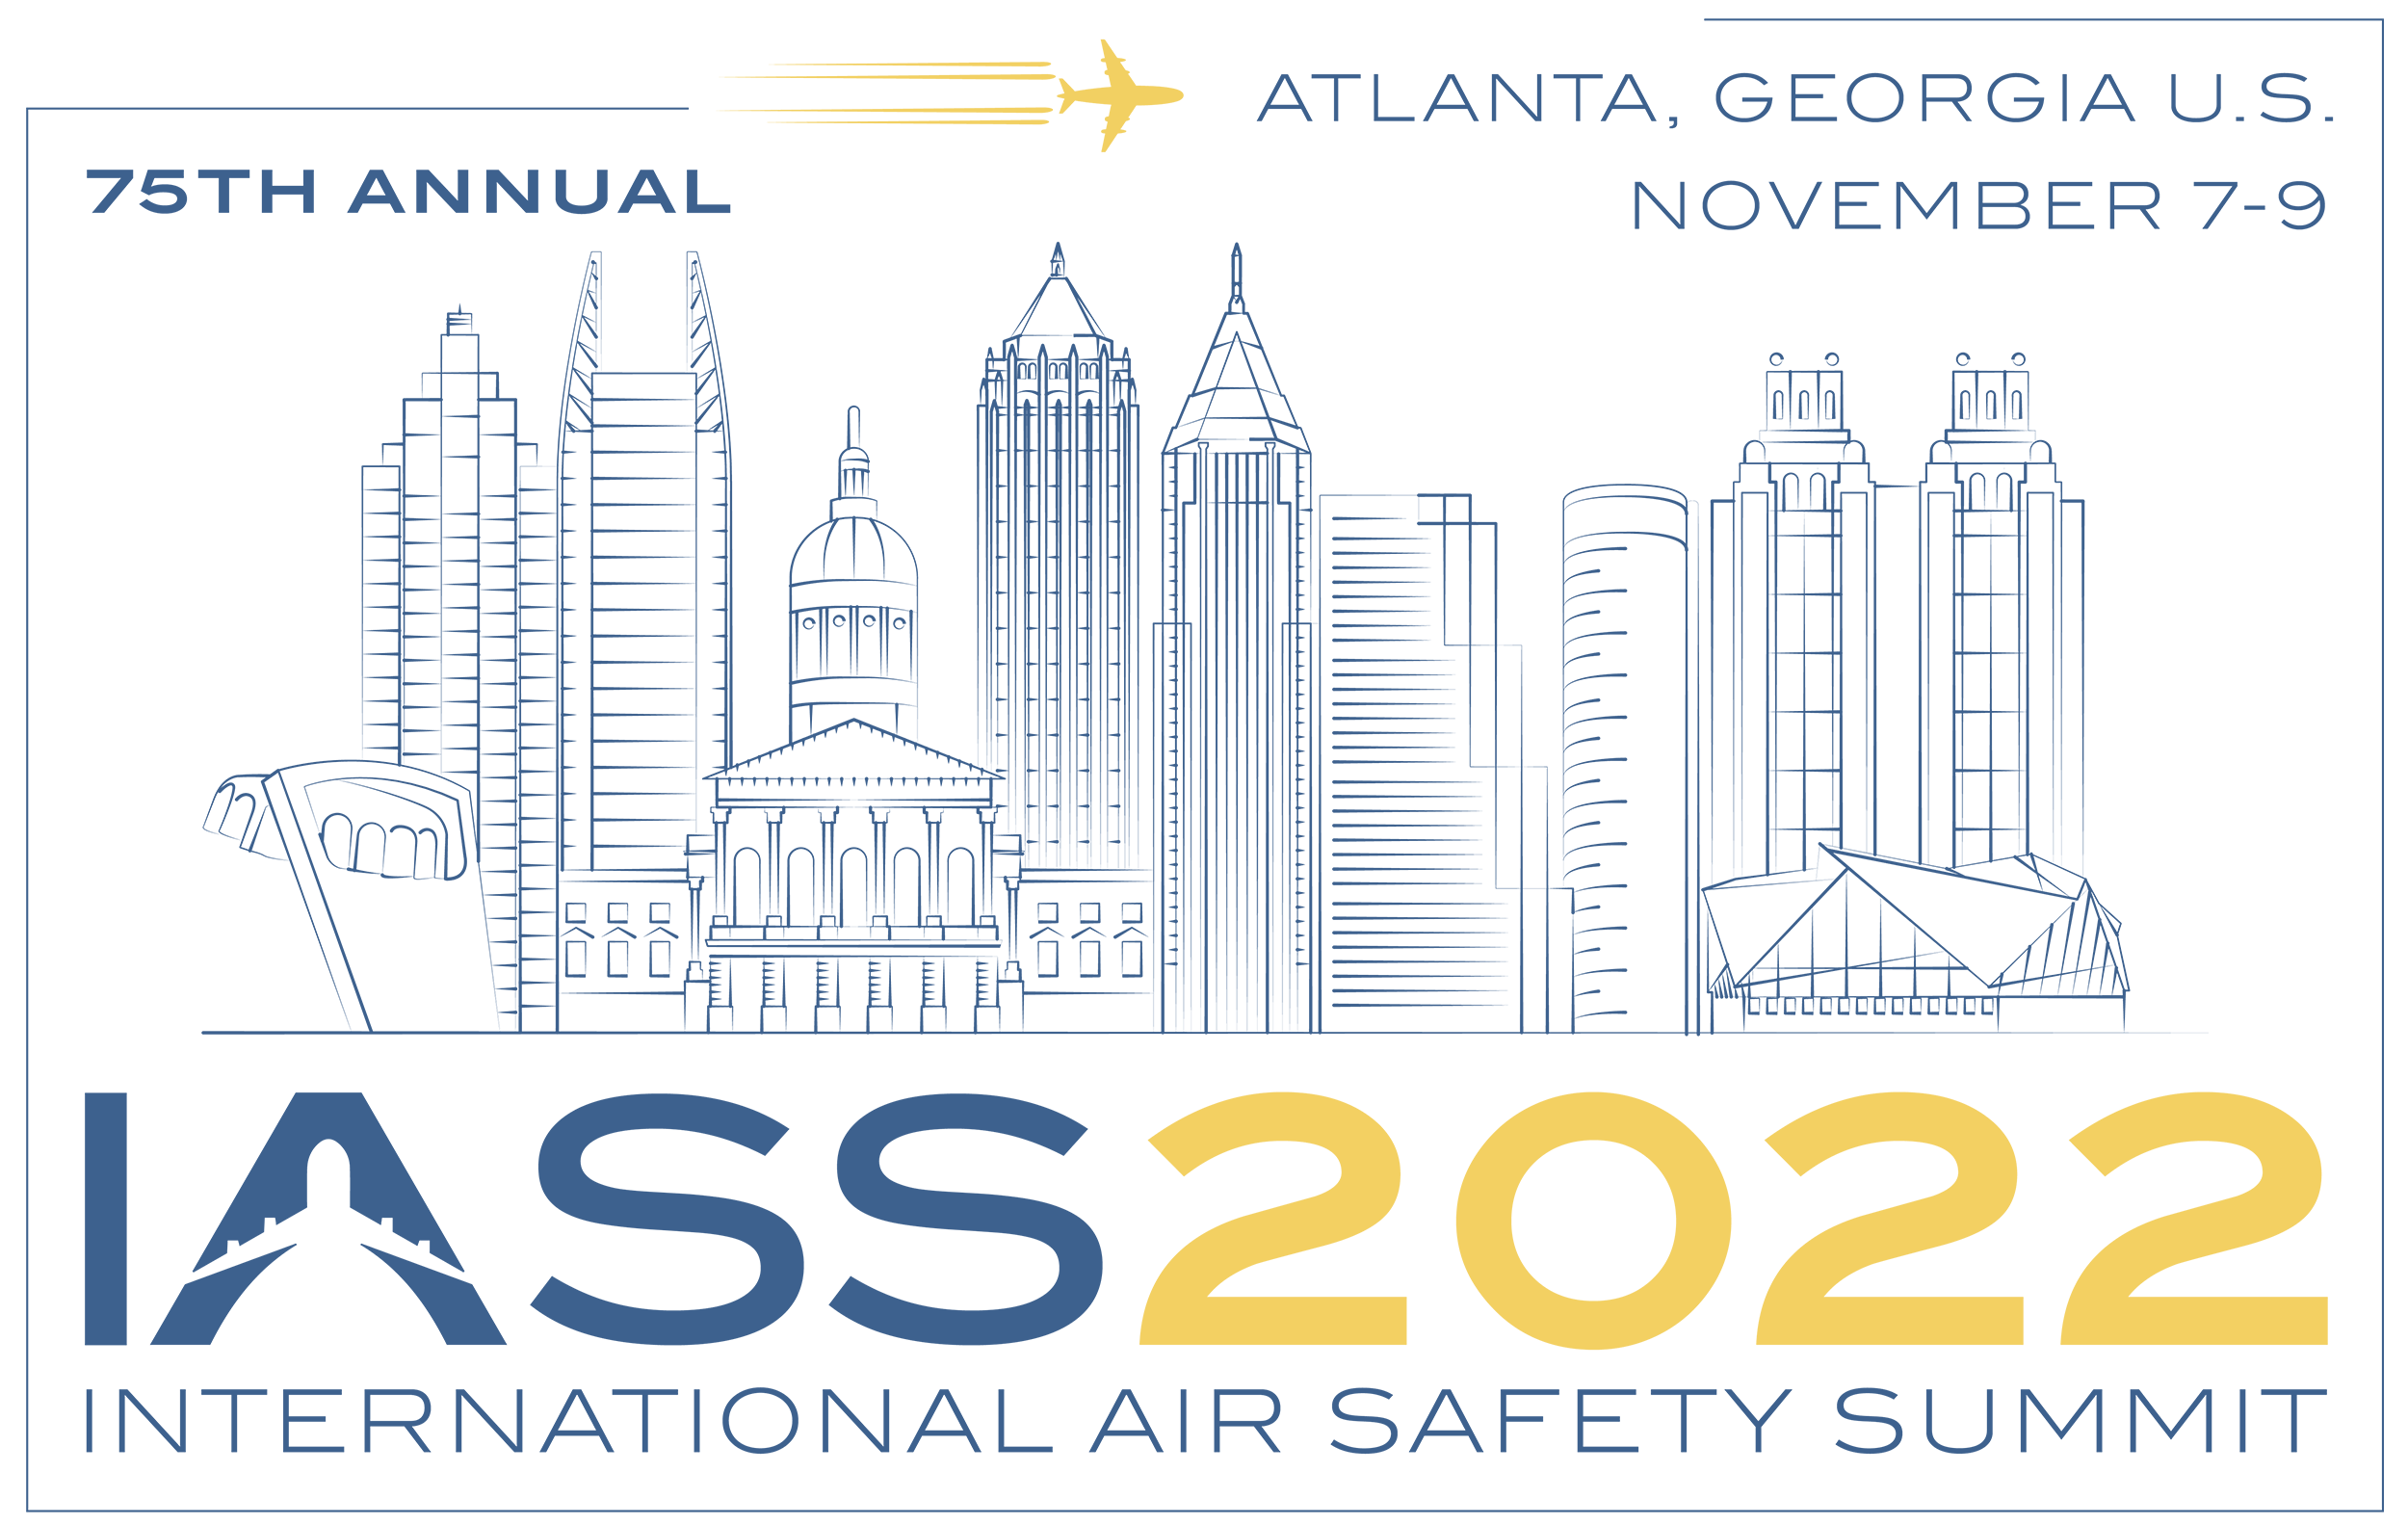 IASS 2022 Atlanta Georgia